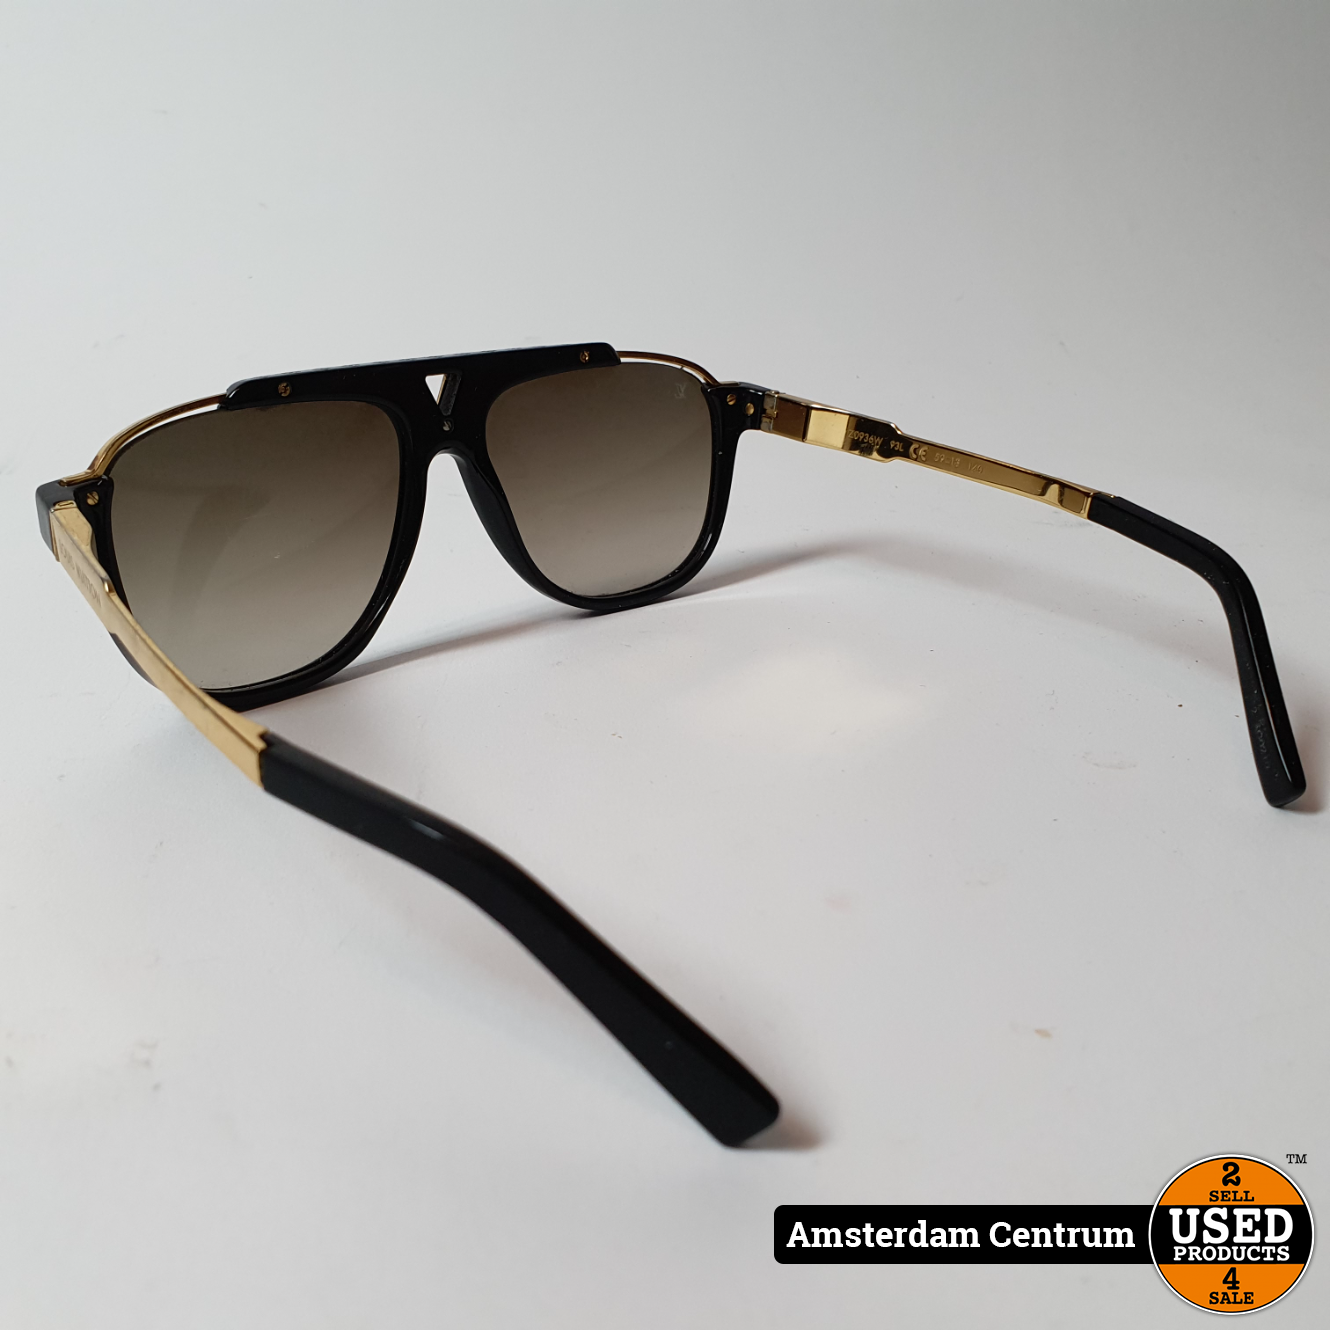 Louis Vuitton Mascot Aviator Sunglasses Acetate and Metal Brown 1228601